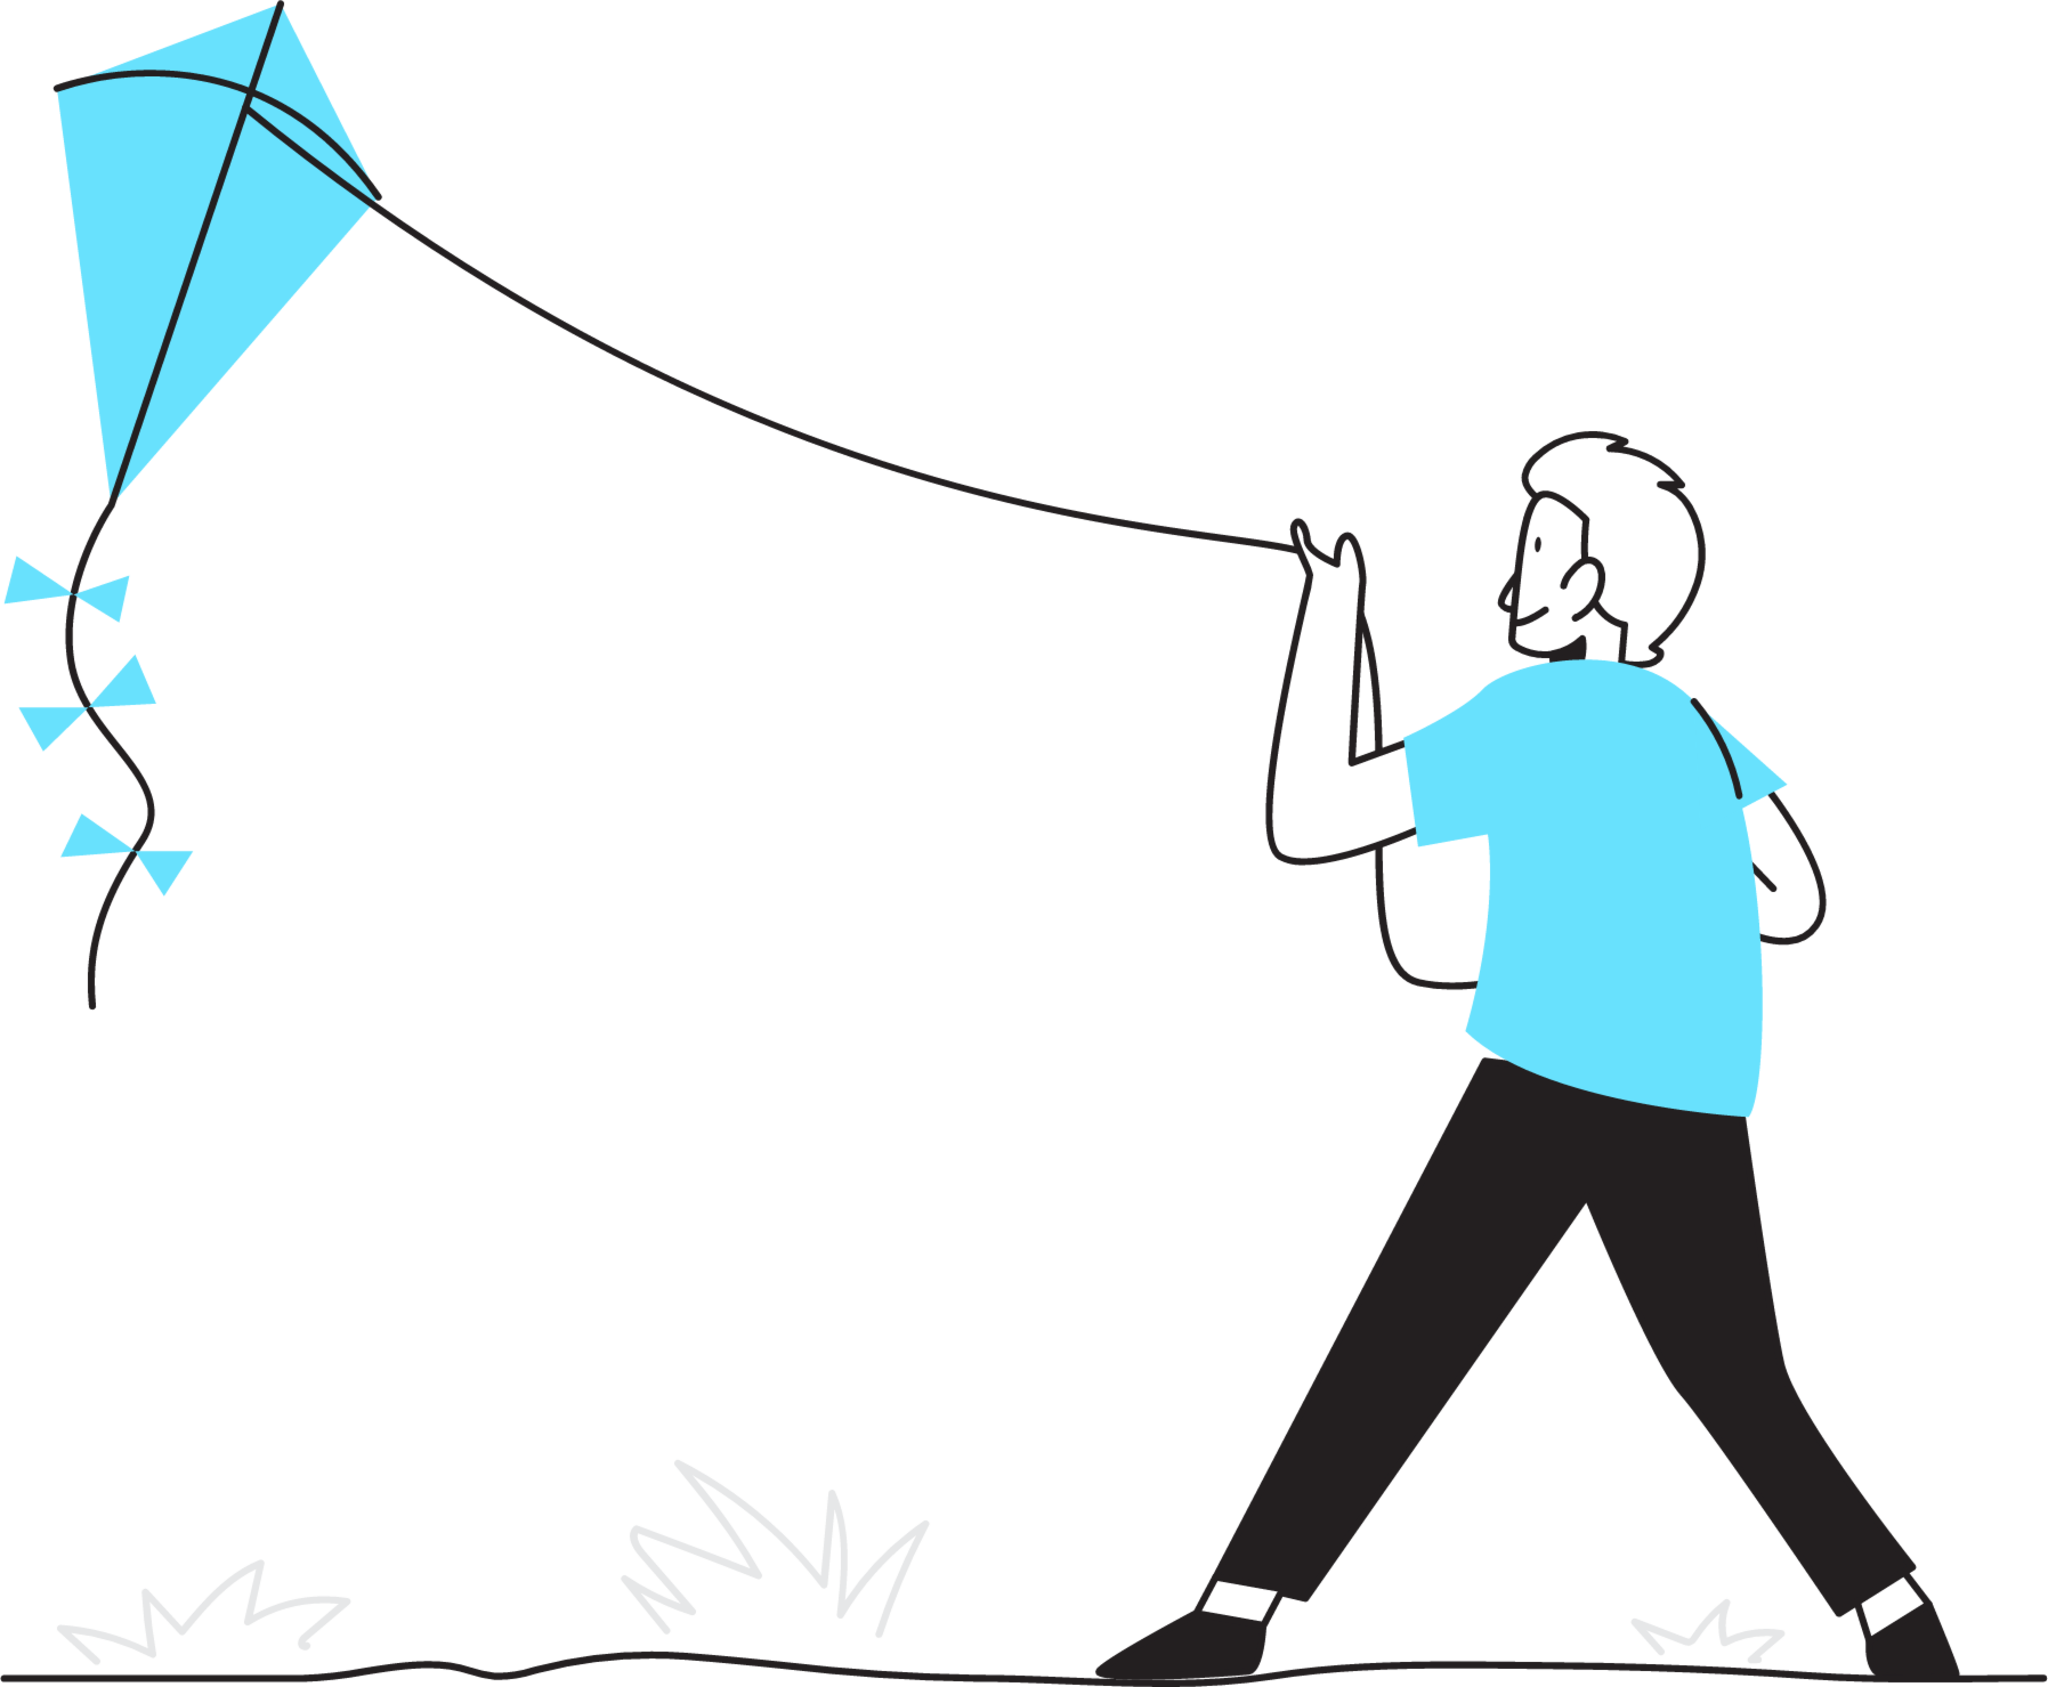 Flying kite illustration